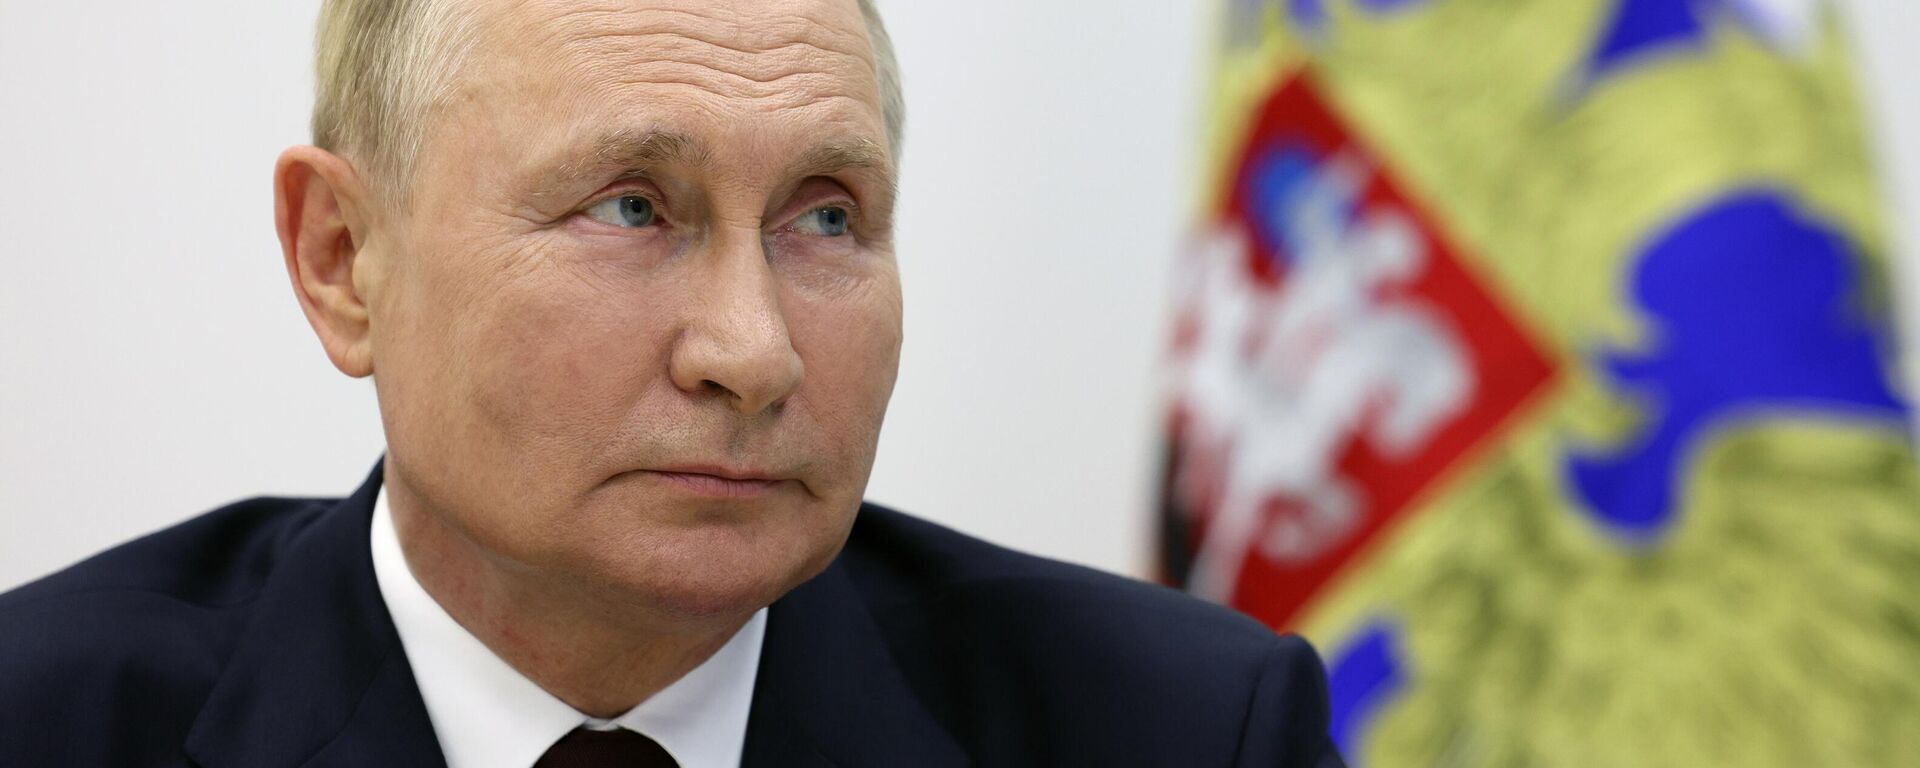 Presidente da Rússia, Vladimir Putin, no dia 1º de setembro de 2022 - Sputnik Brasil, 1920, 01.09.2022